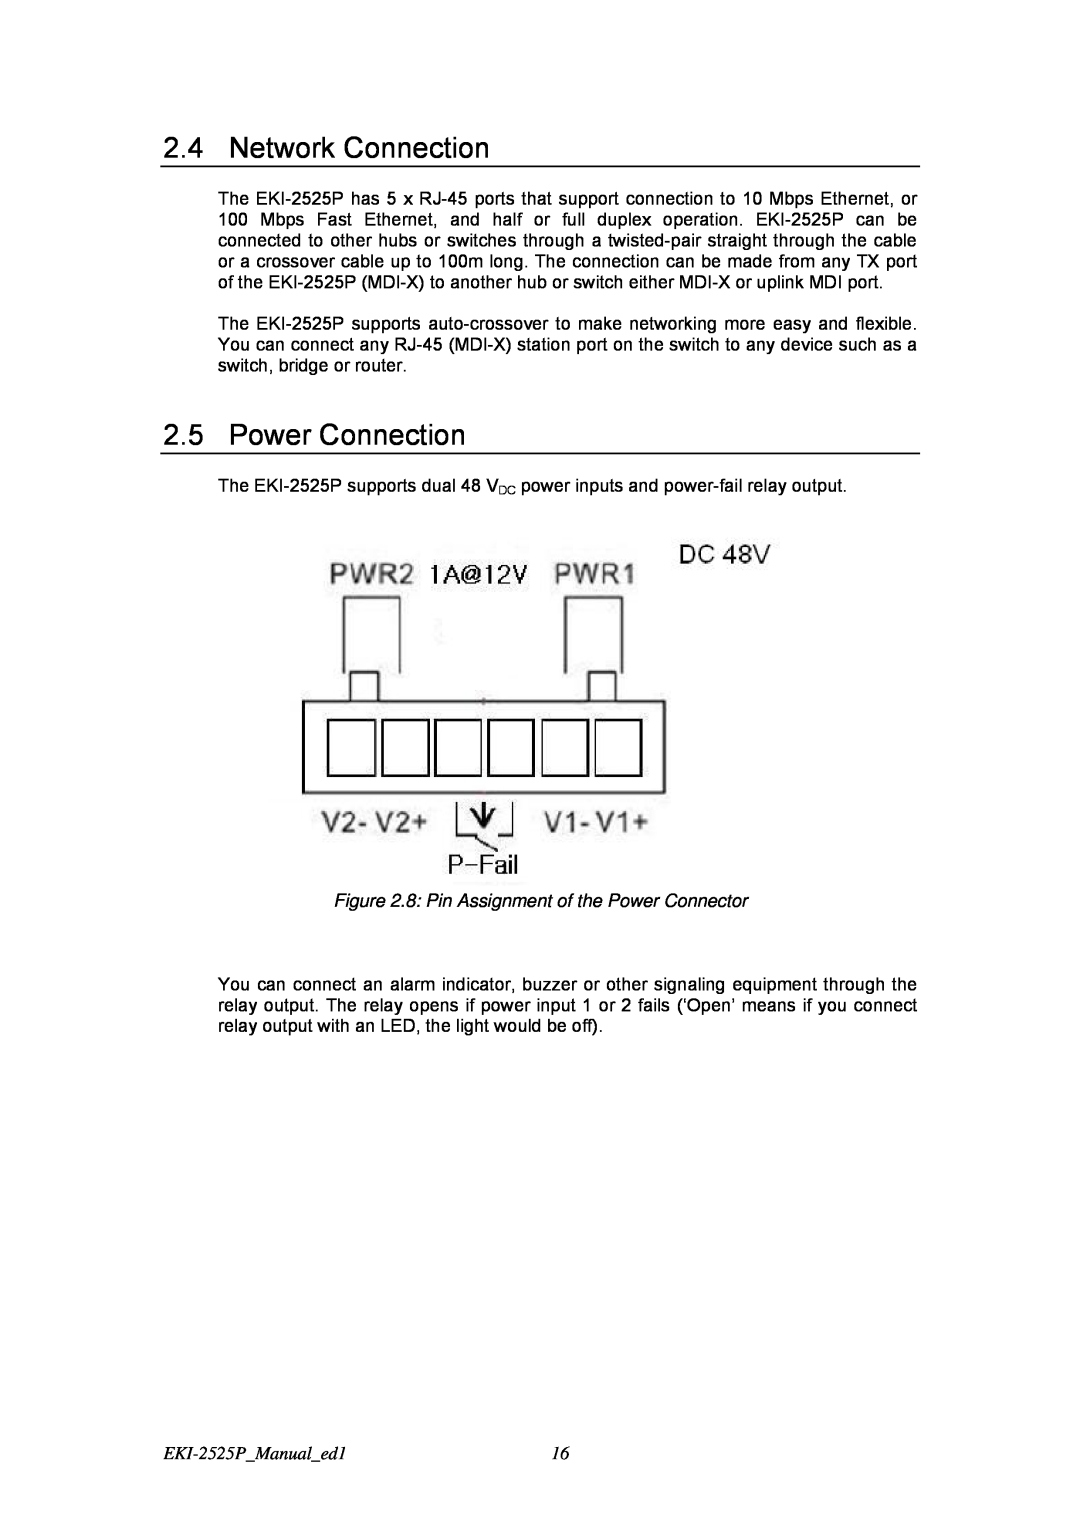 Advantech user manual Network Connection, Power Connection, 8 Pin Assignment of the Power Connector, EKI-2525PManualed1 